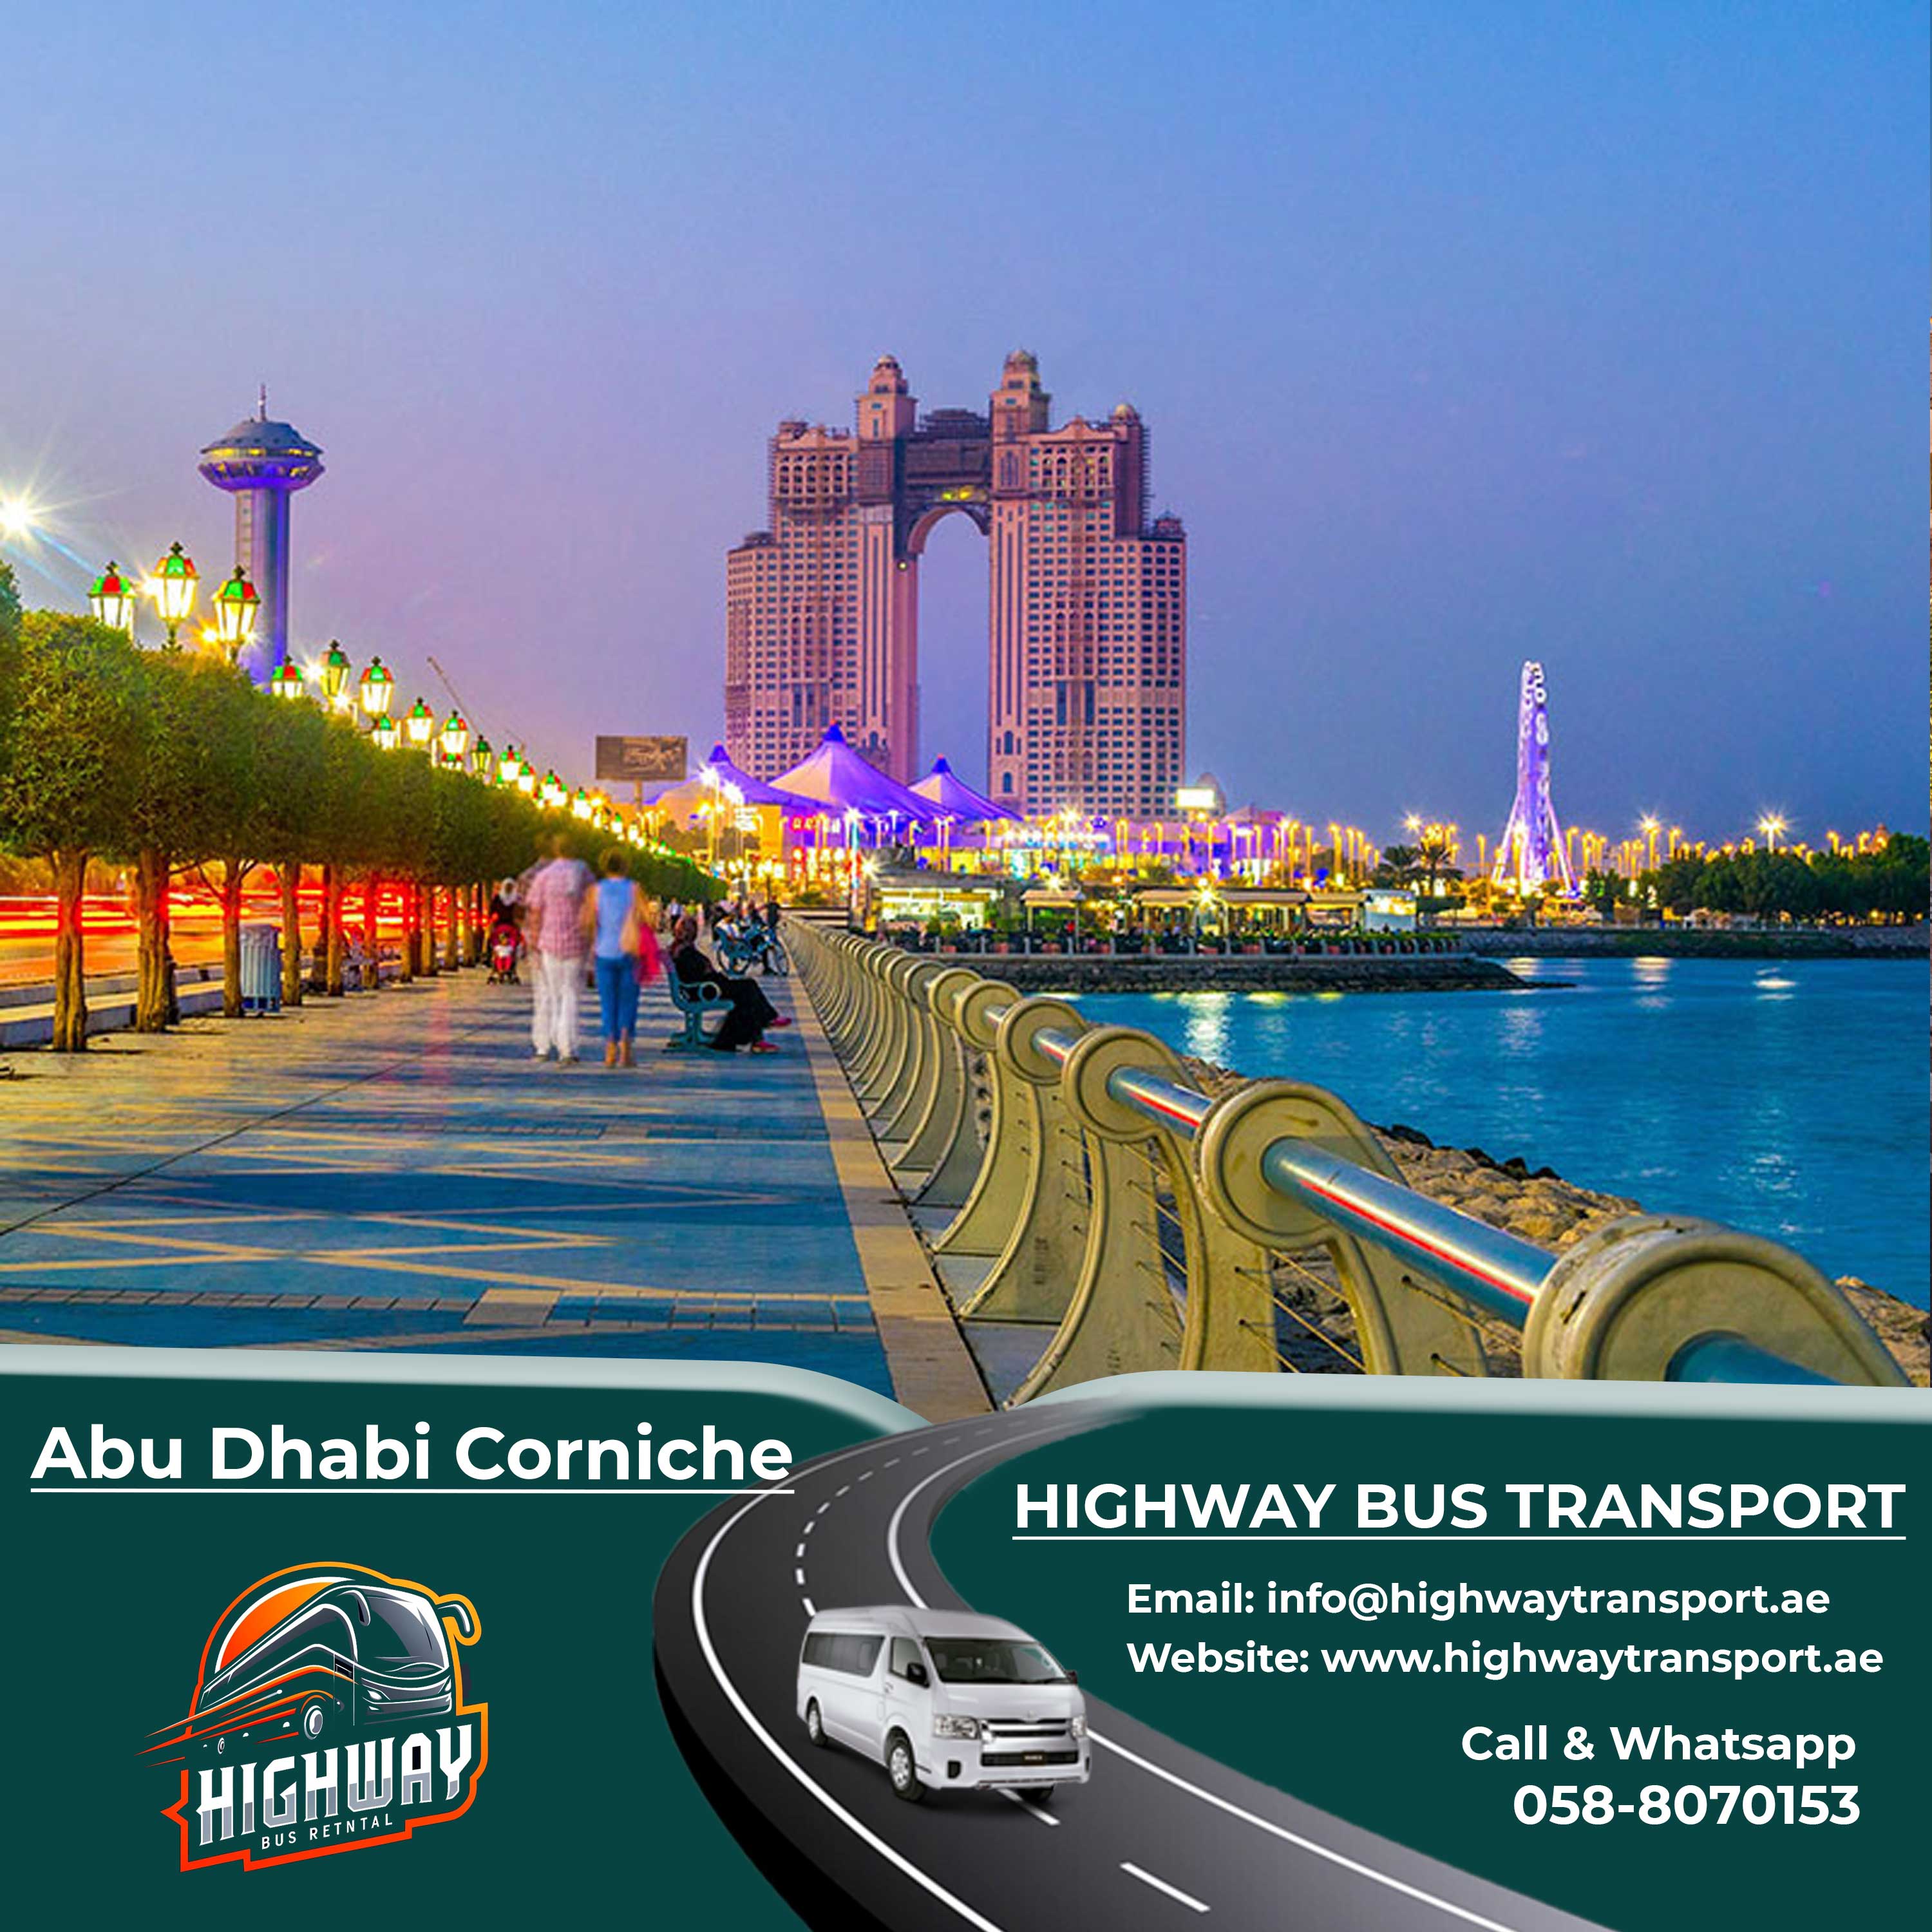 Abu Dhabi Corniche featuring beach activities, bike rentals, and waterfront restaurants